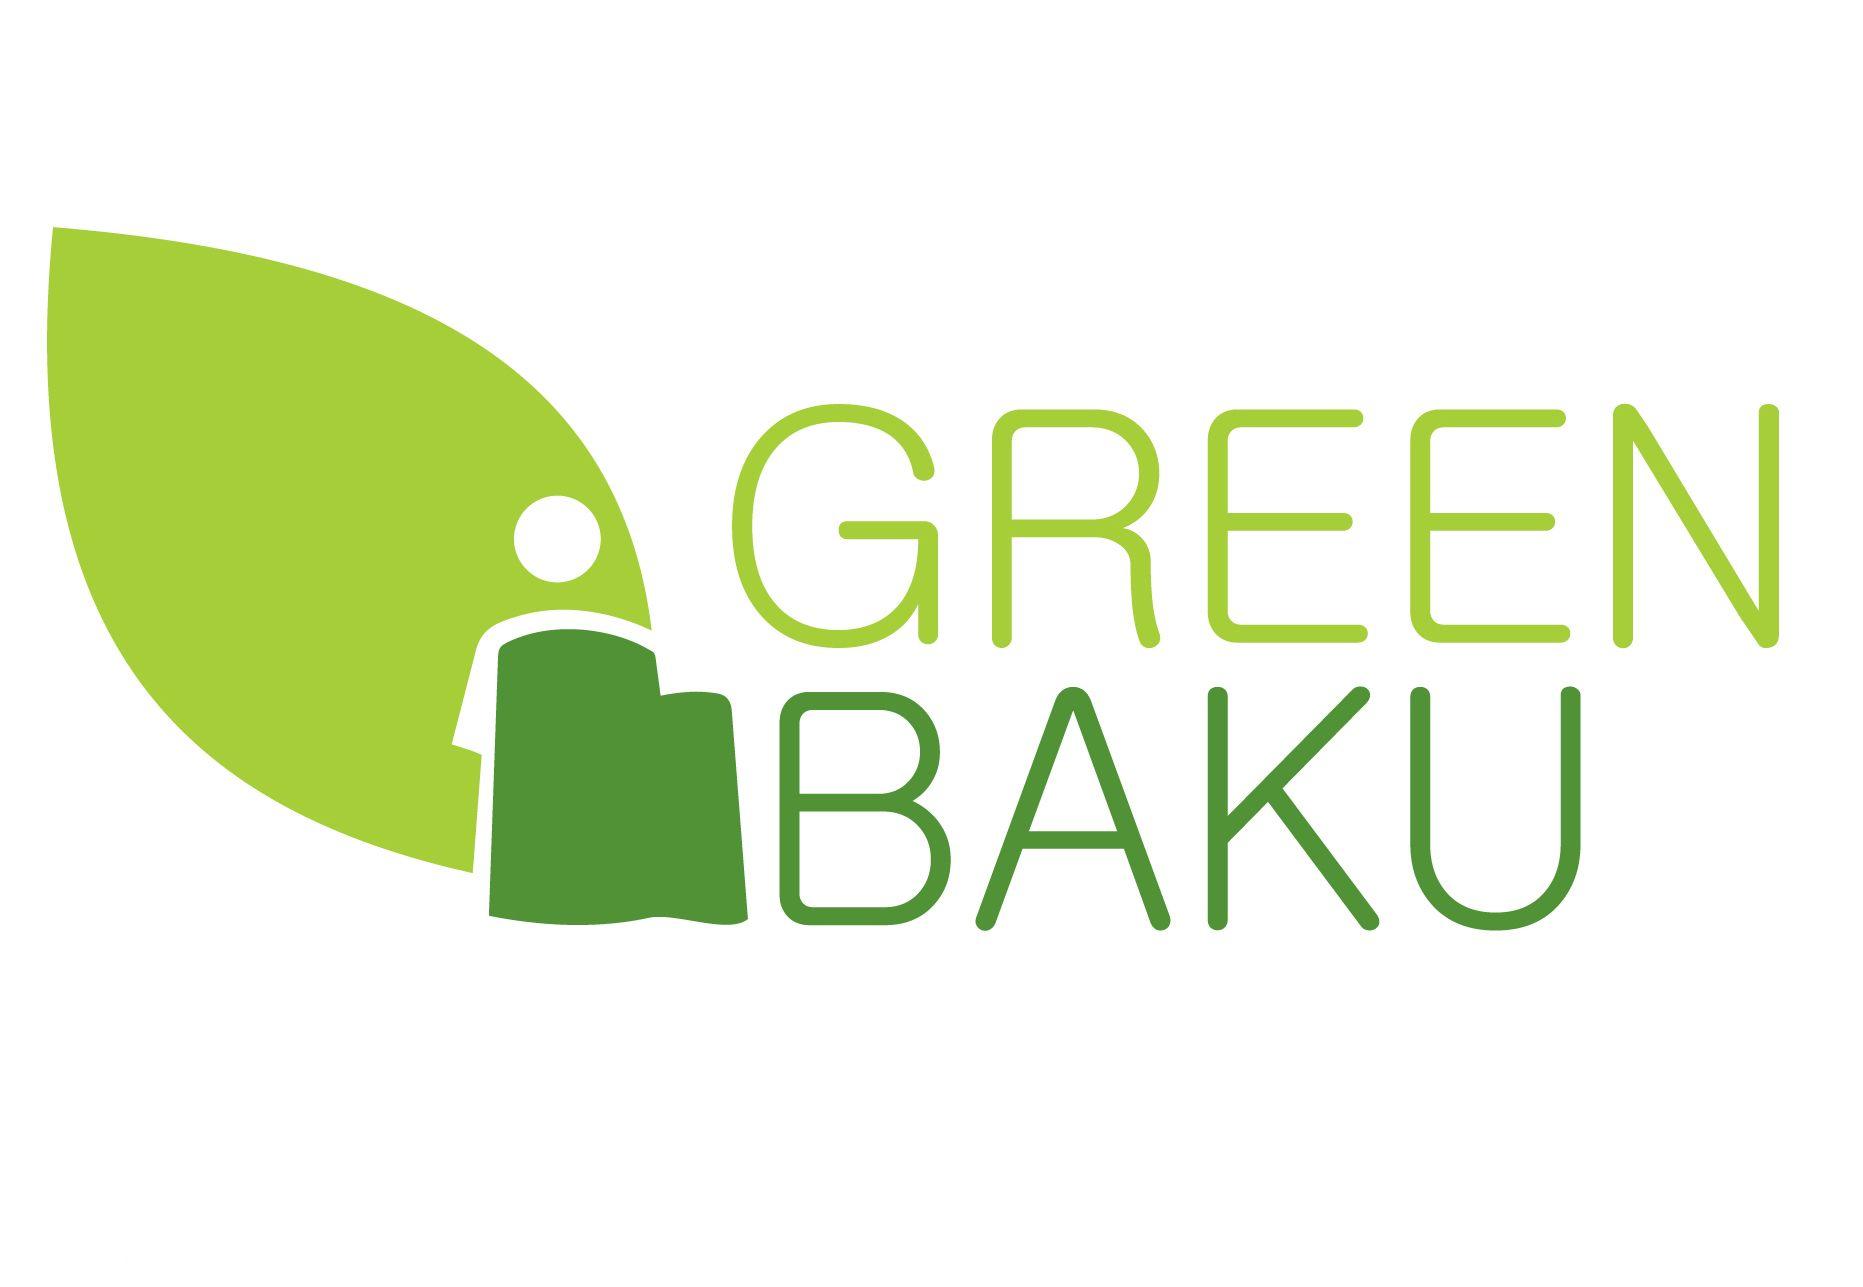 Green Logo - File:Green-logo.JPG - Wikimedia Commons